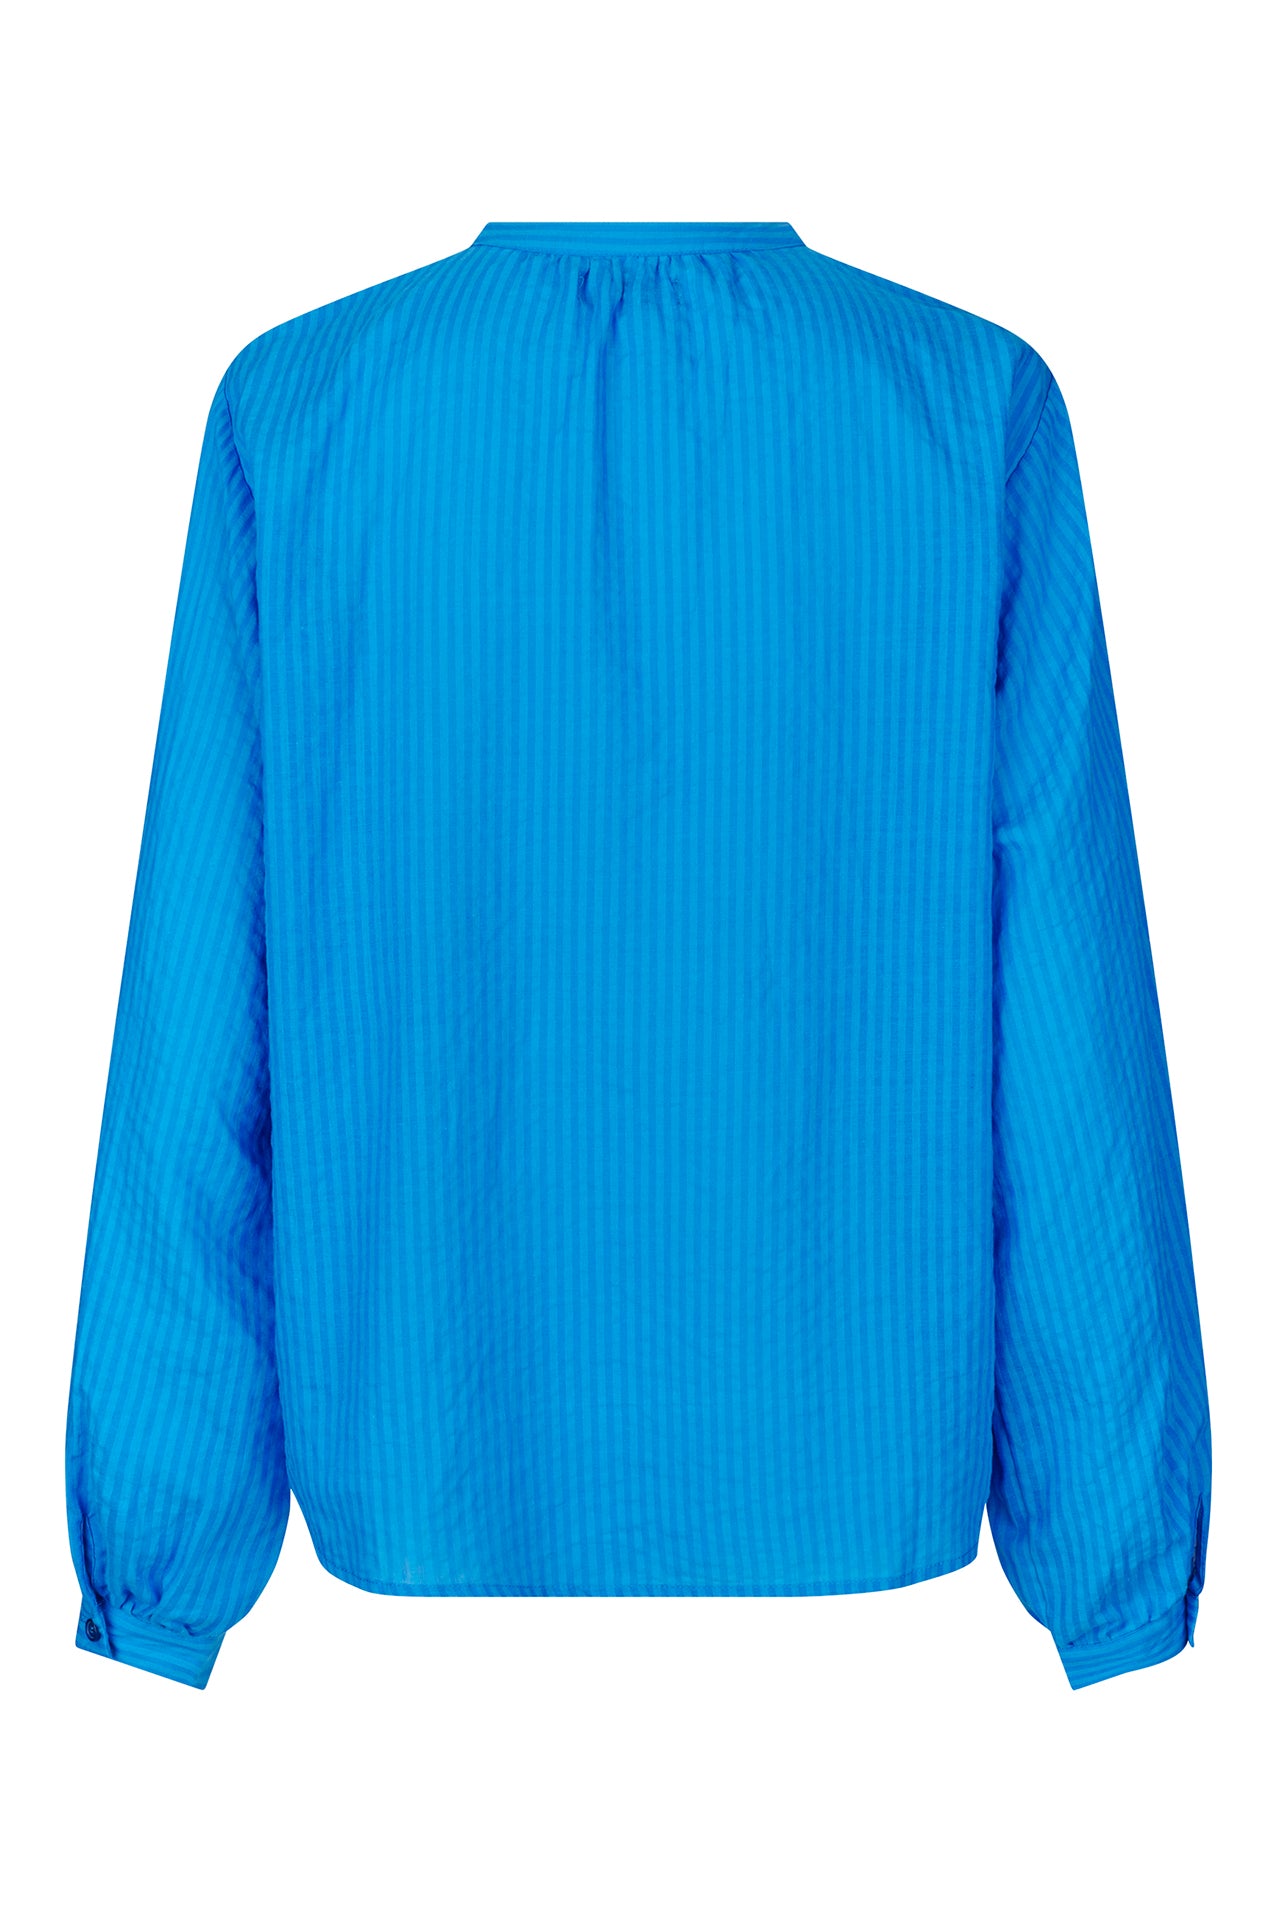 Lollys Laundry LimaLL Shirt LS Shirt 20 Blue